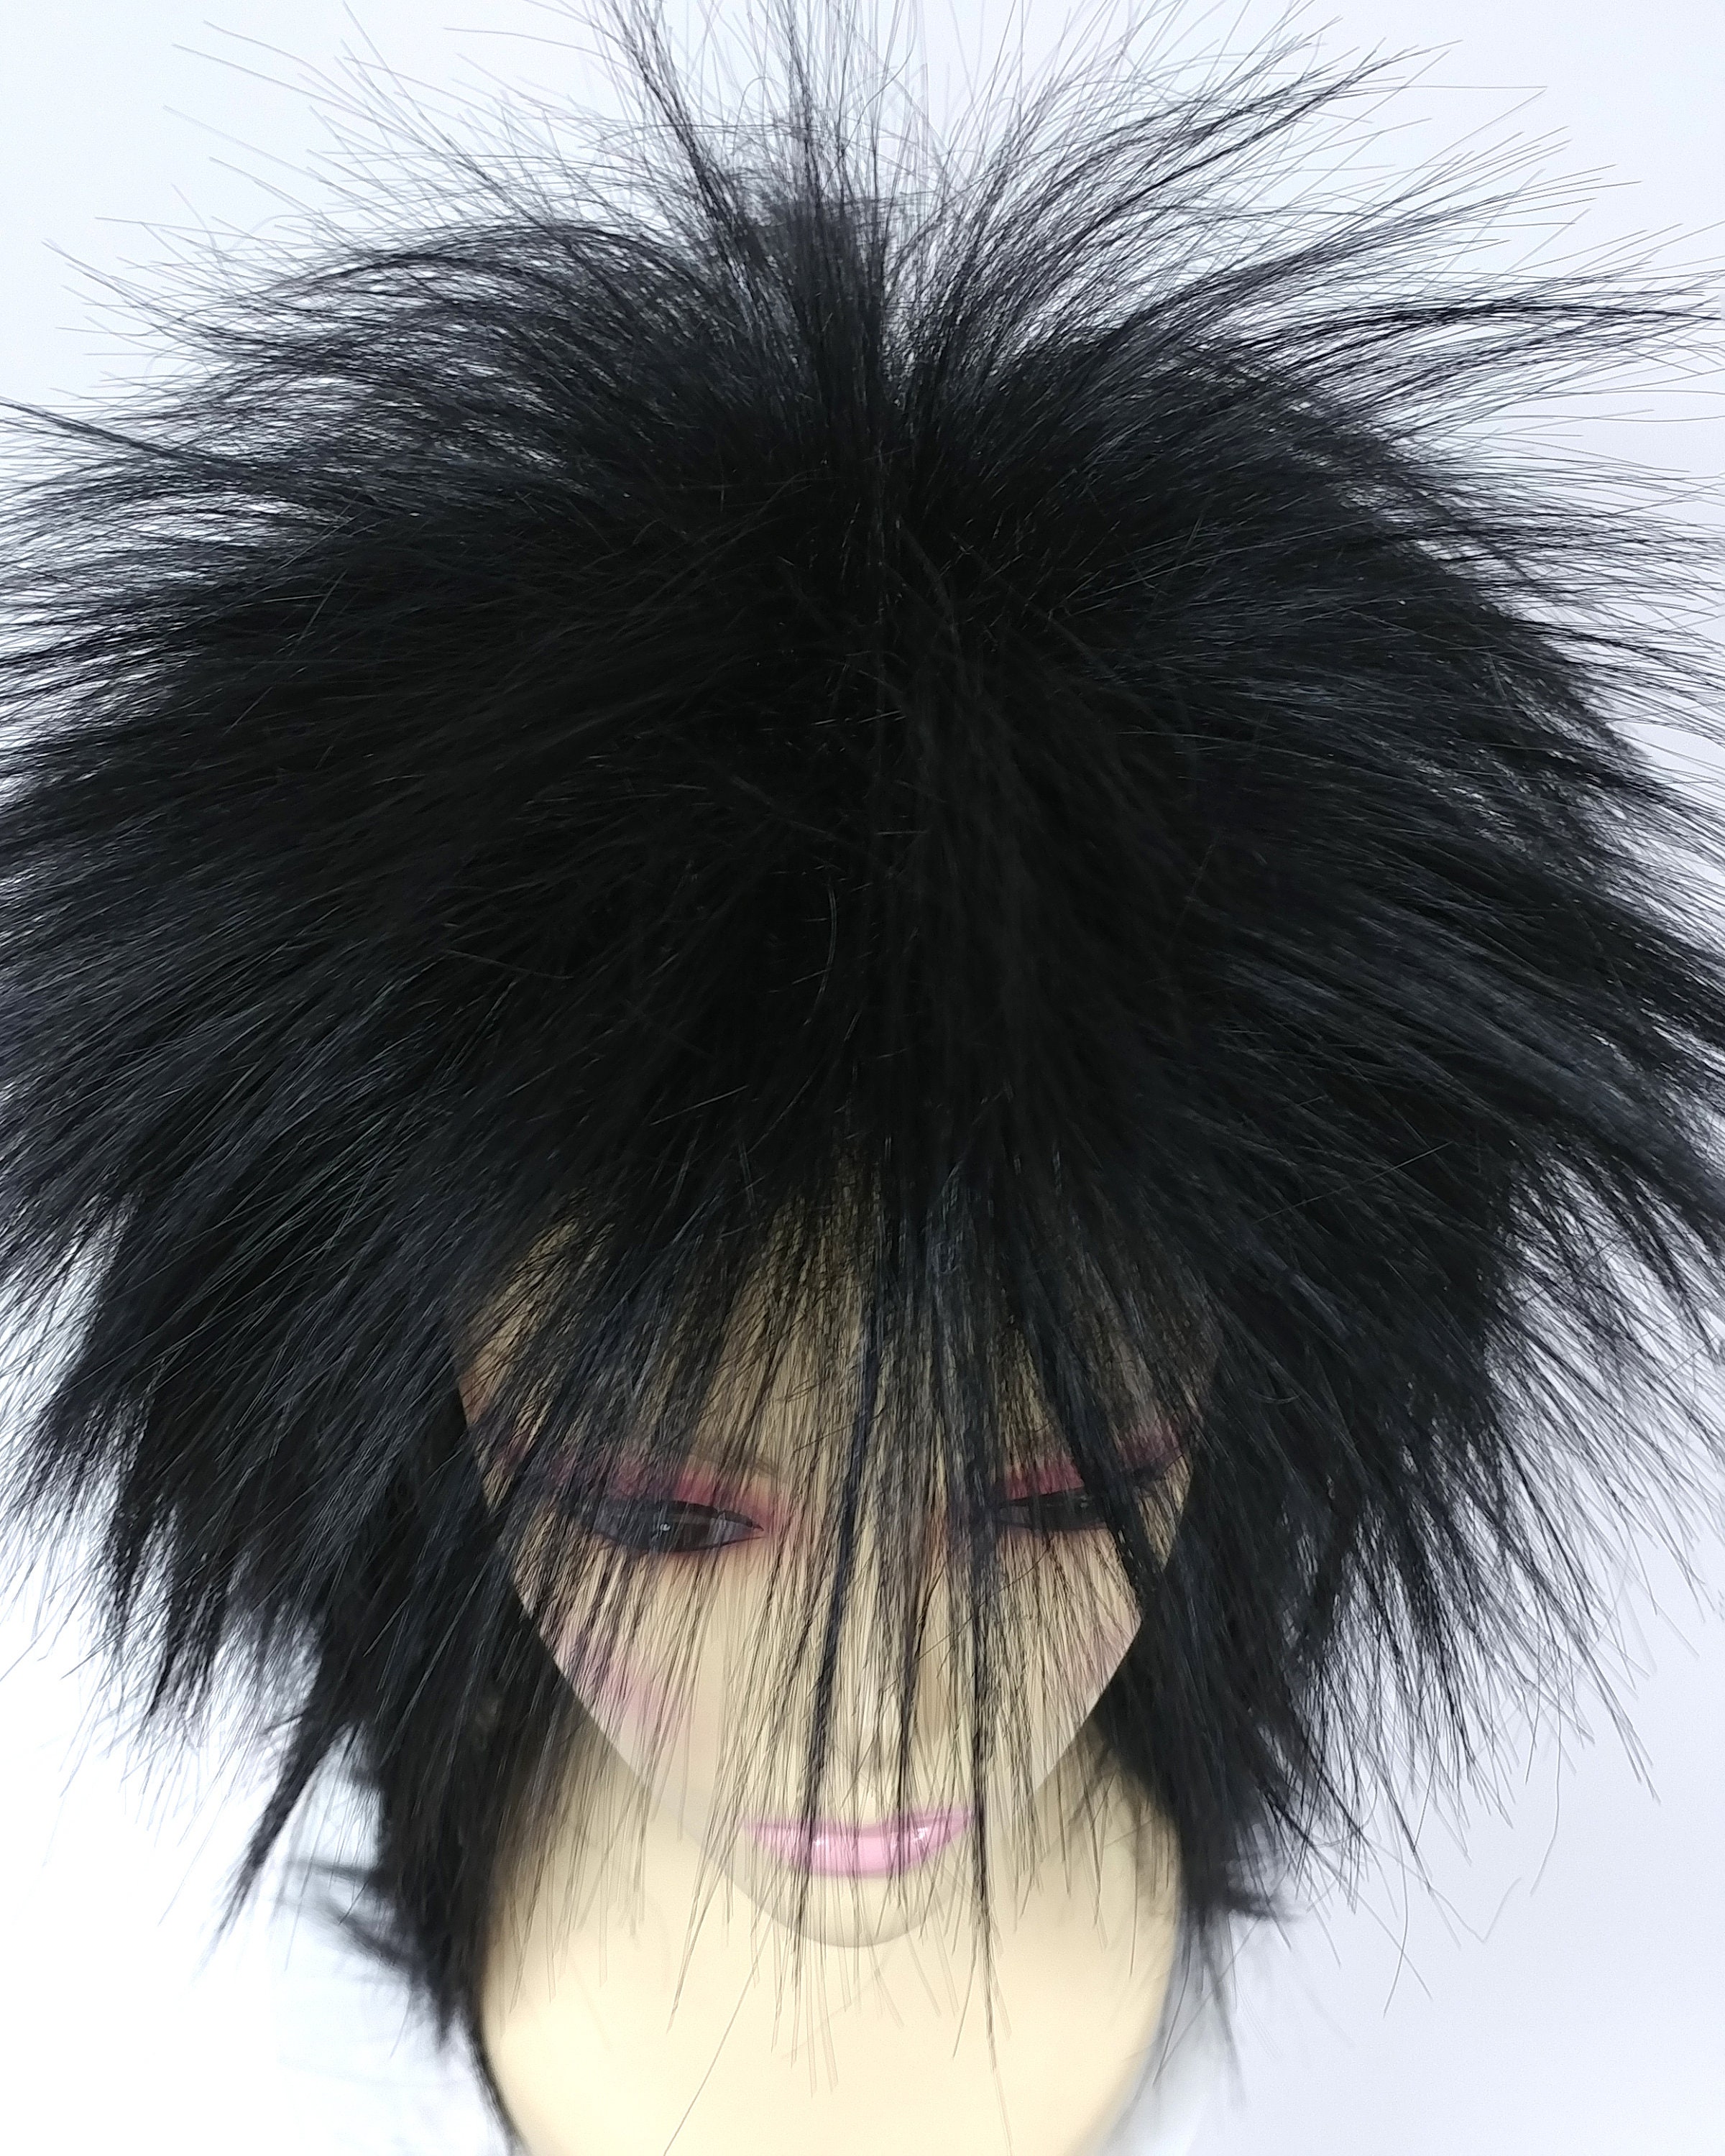 W906 70s Glam Rocker Costume Wig Hair David Bowie 80s Celebrity Mullet Idol